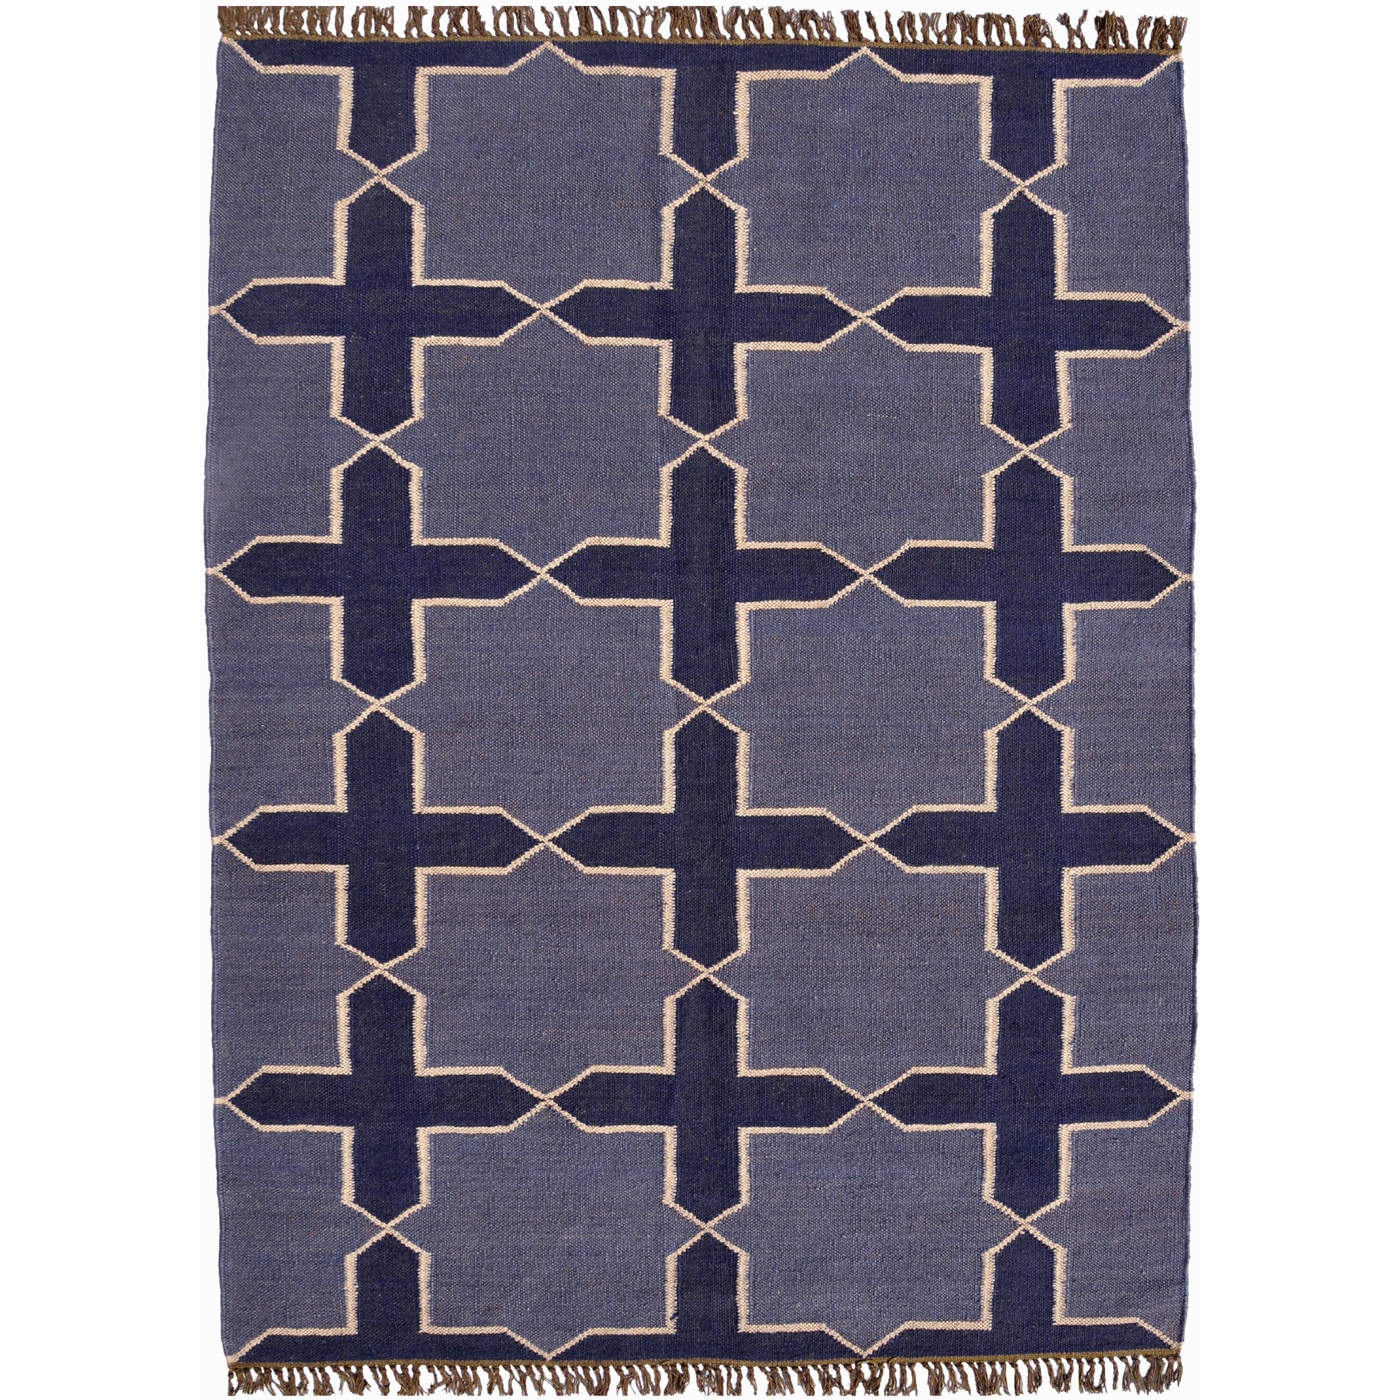 Hand woven Blue Jute/wool Flat Weave Rug (8 X 11)